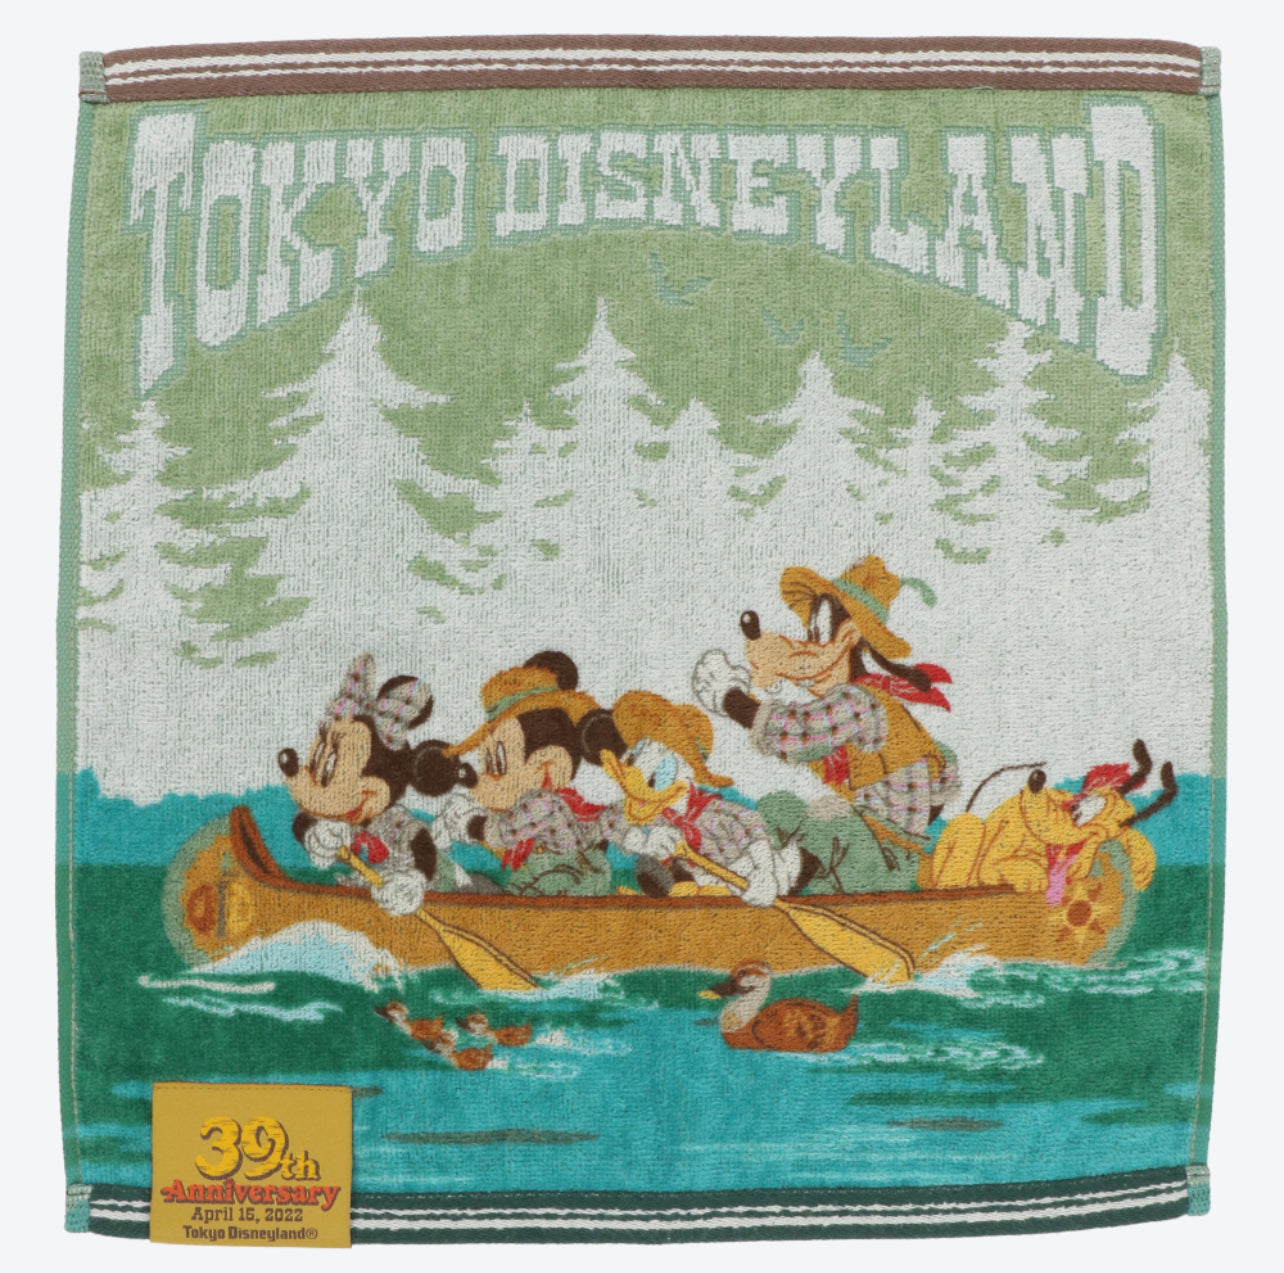 TDR - "Tokoy Disneyland 39th Anniversary" Collection x Hand Towel